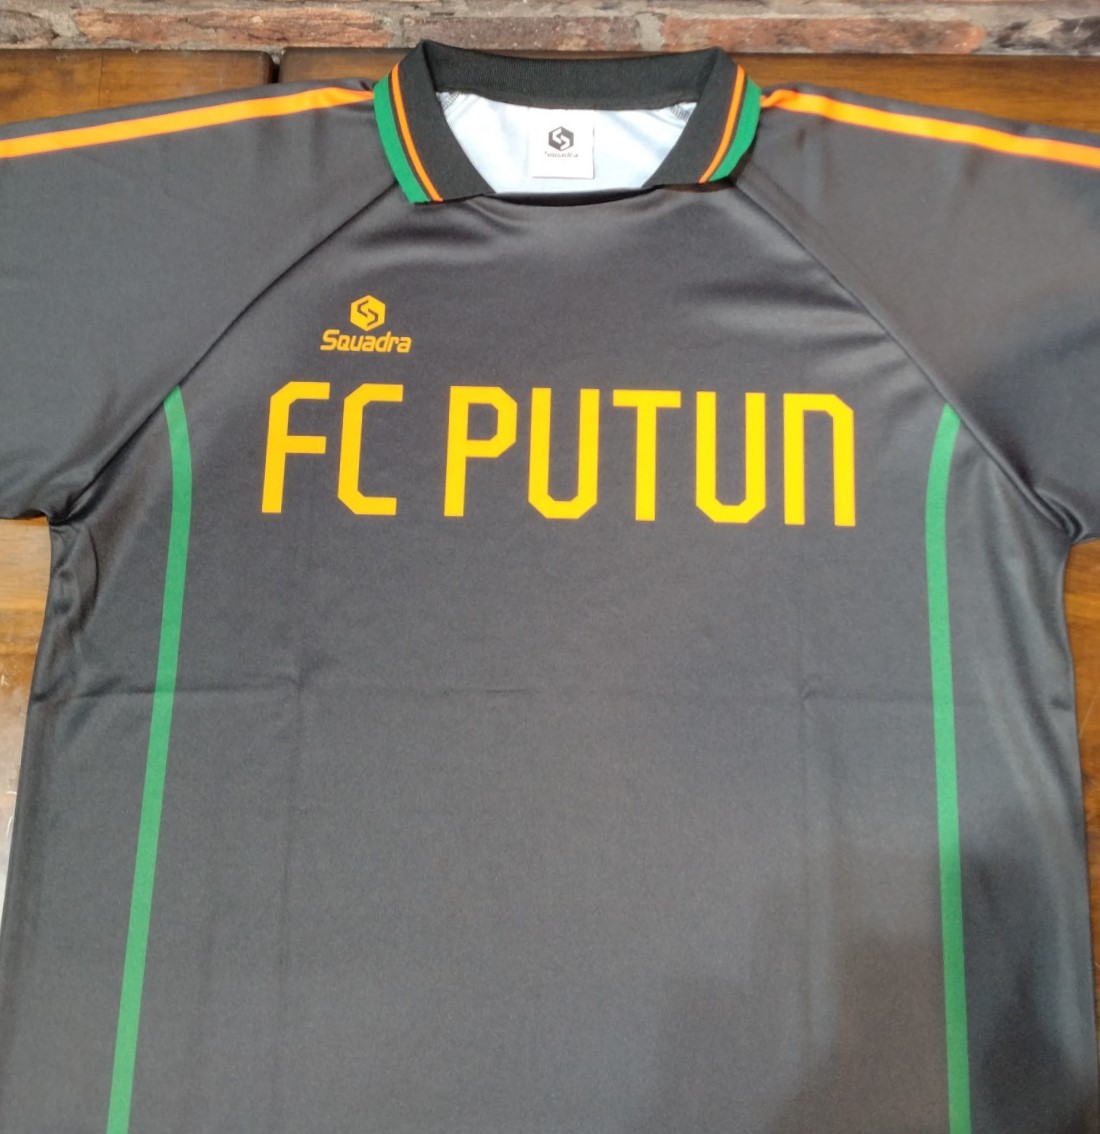 FC PUTUNl